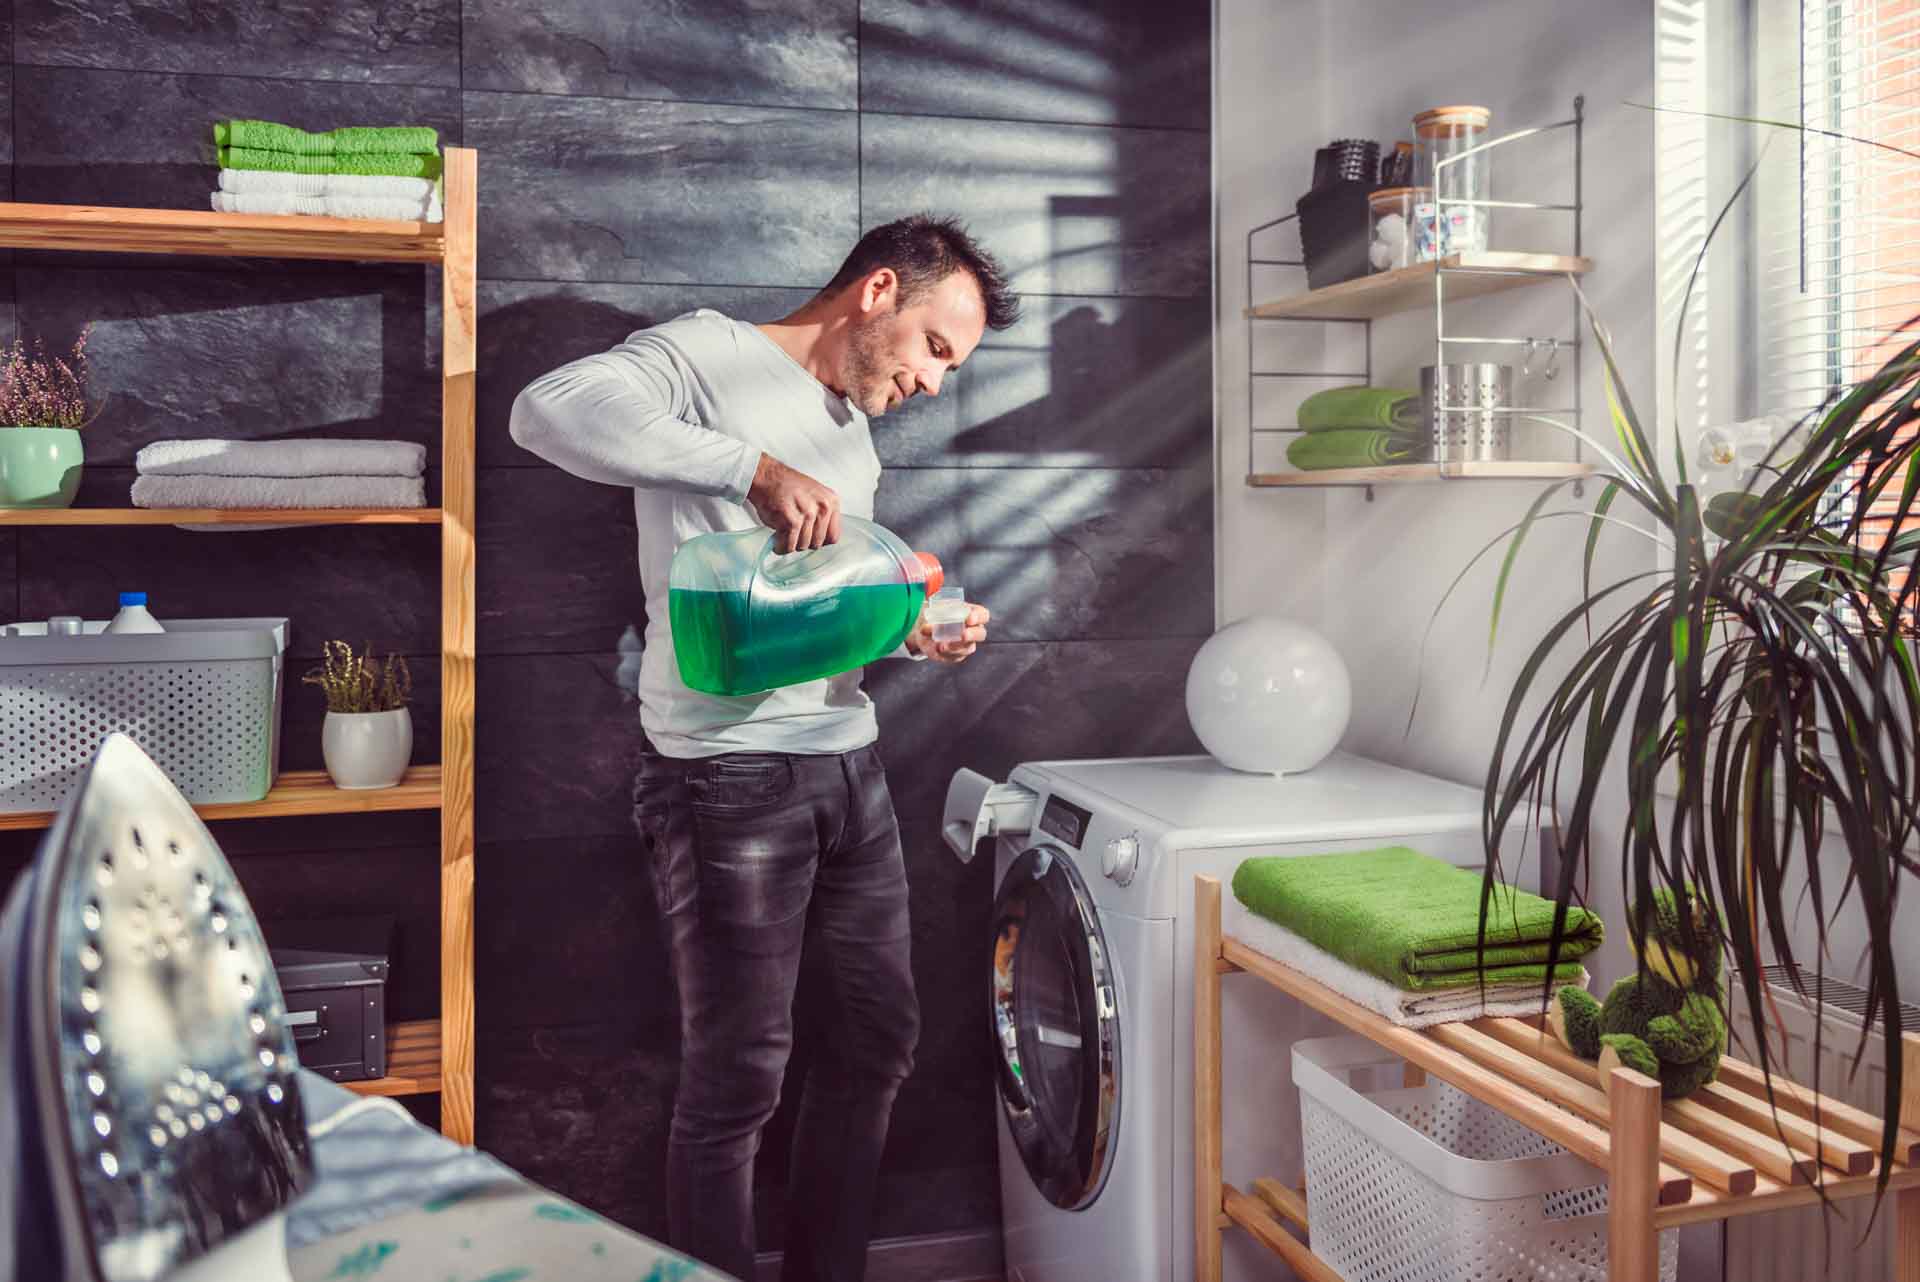 Man filling detergent into washing machine